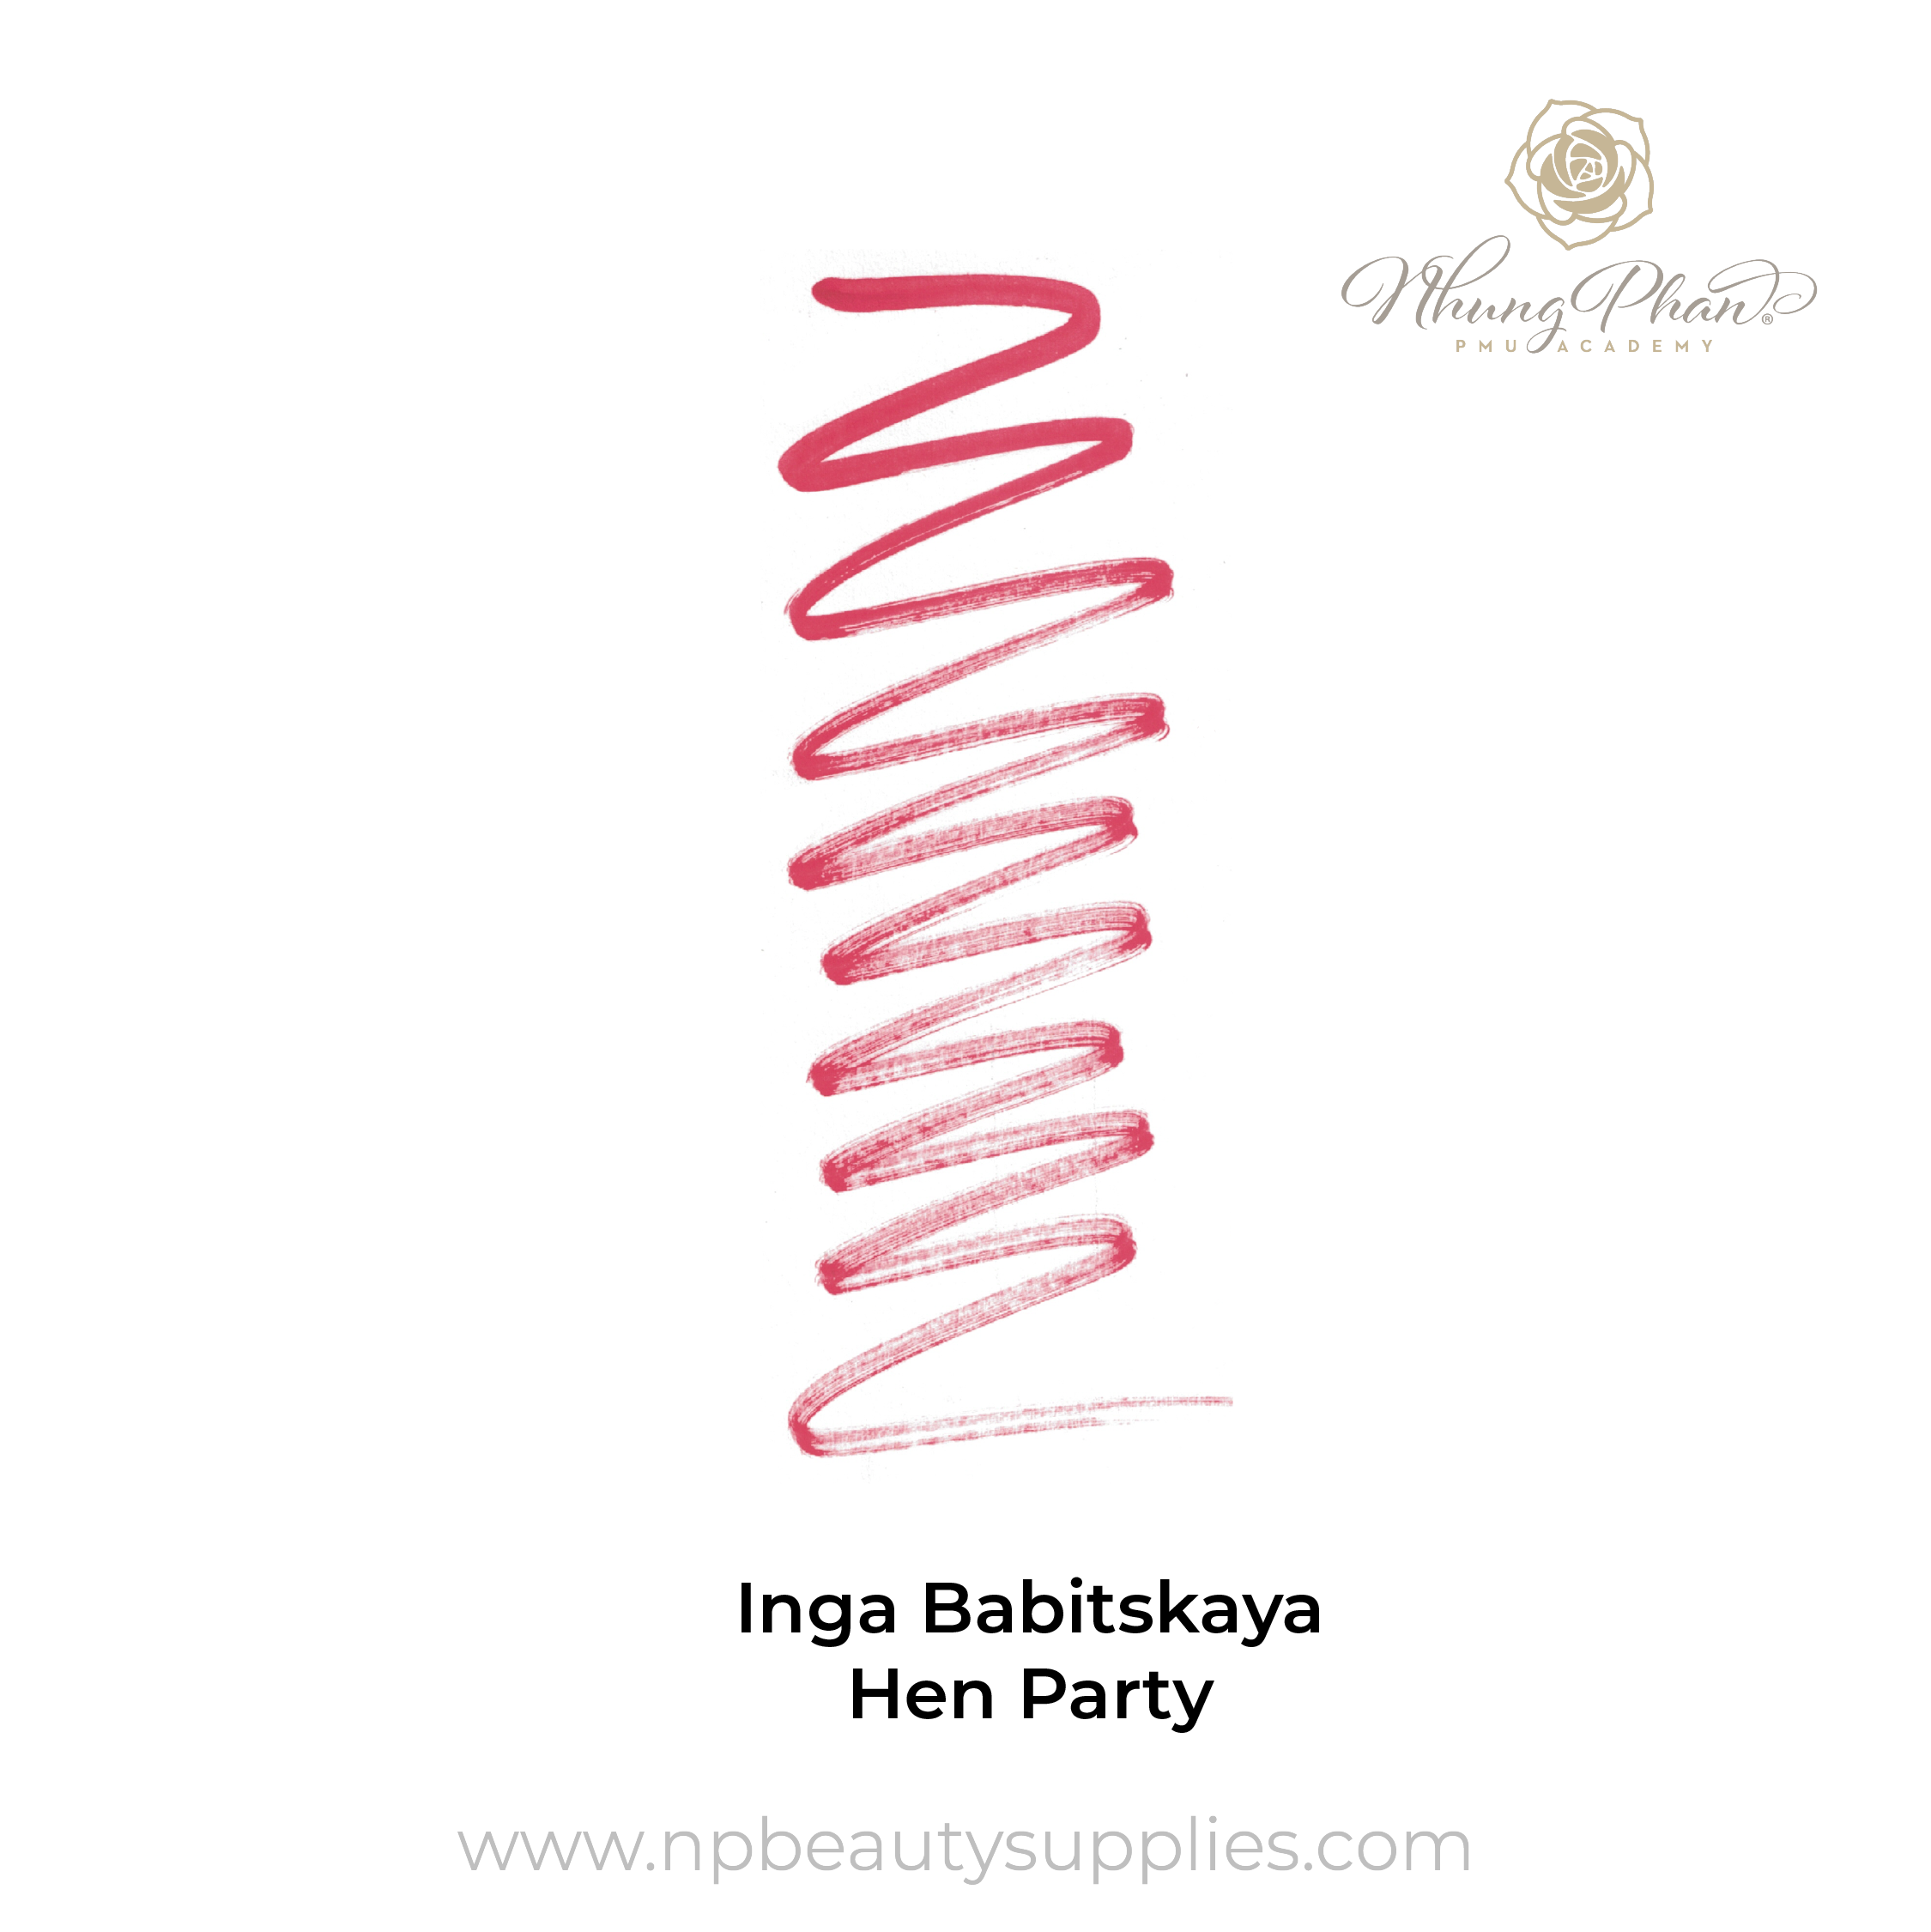 Inga Babitskaya - Hen Party